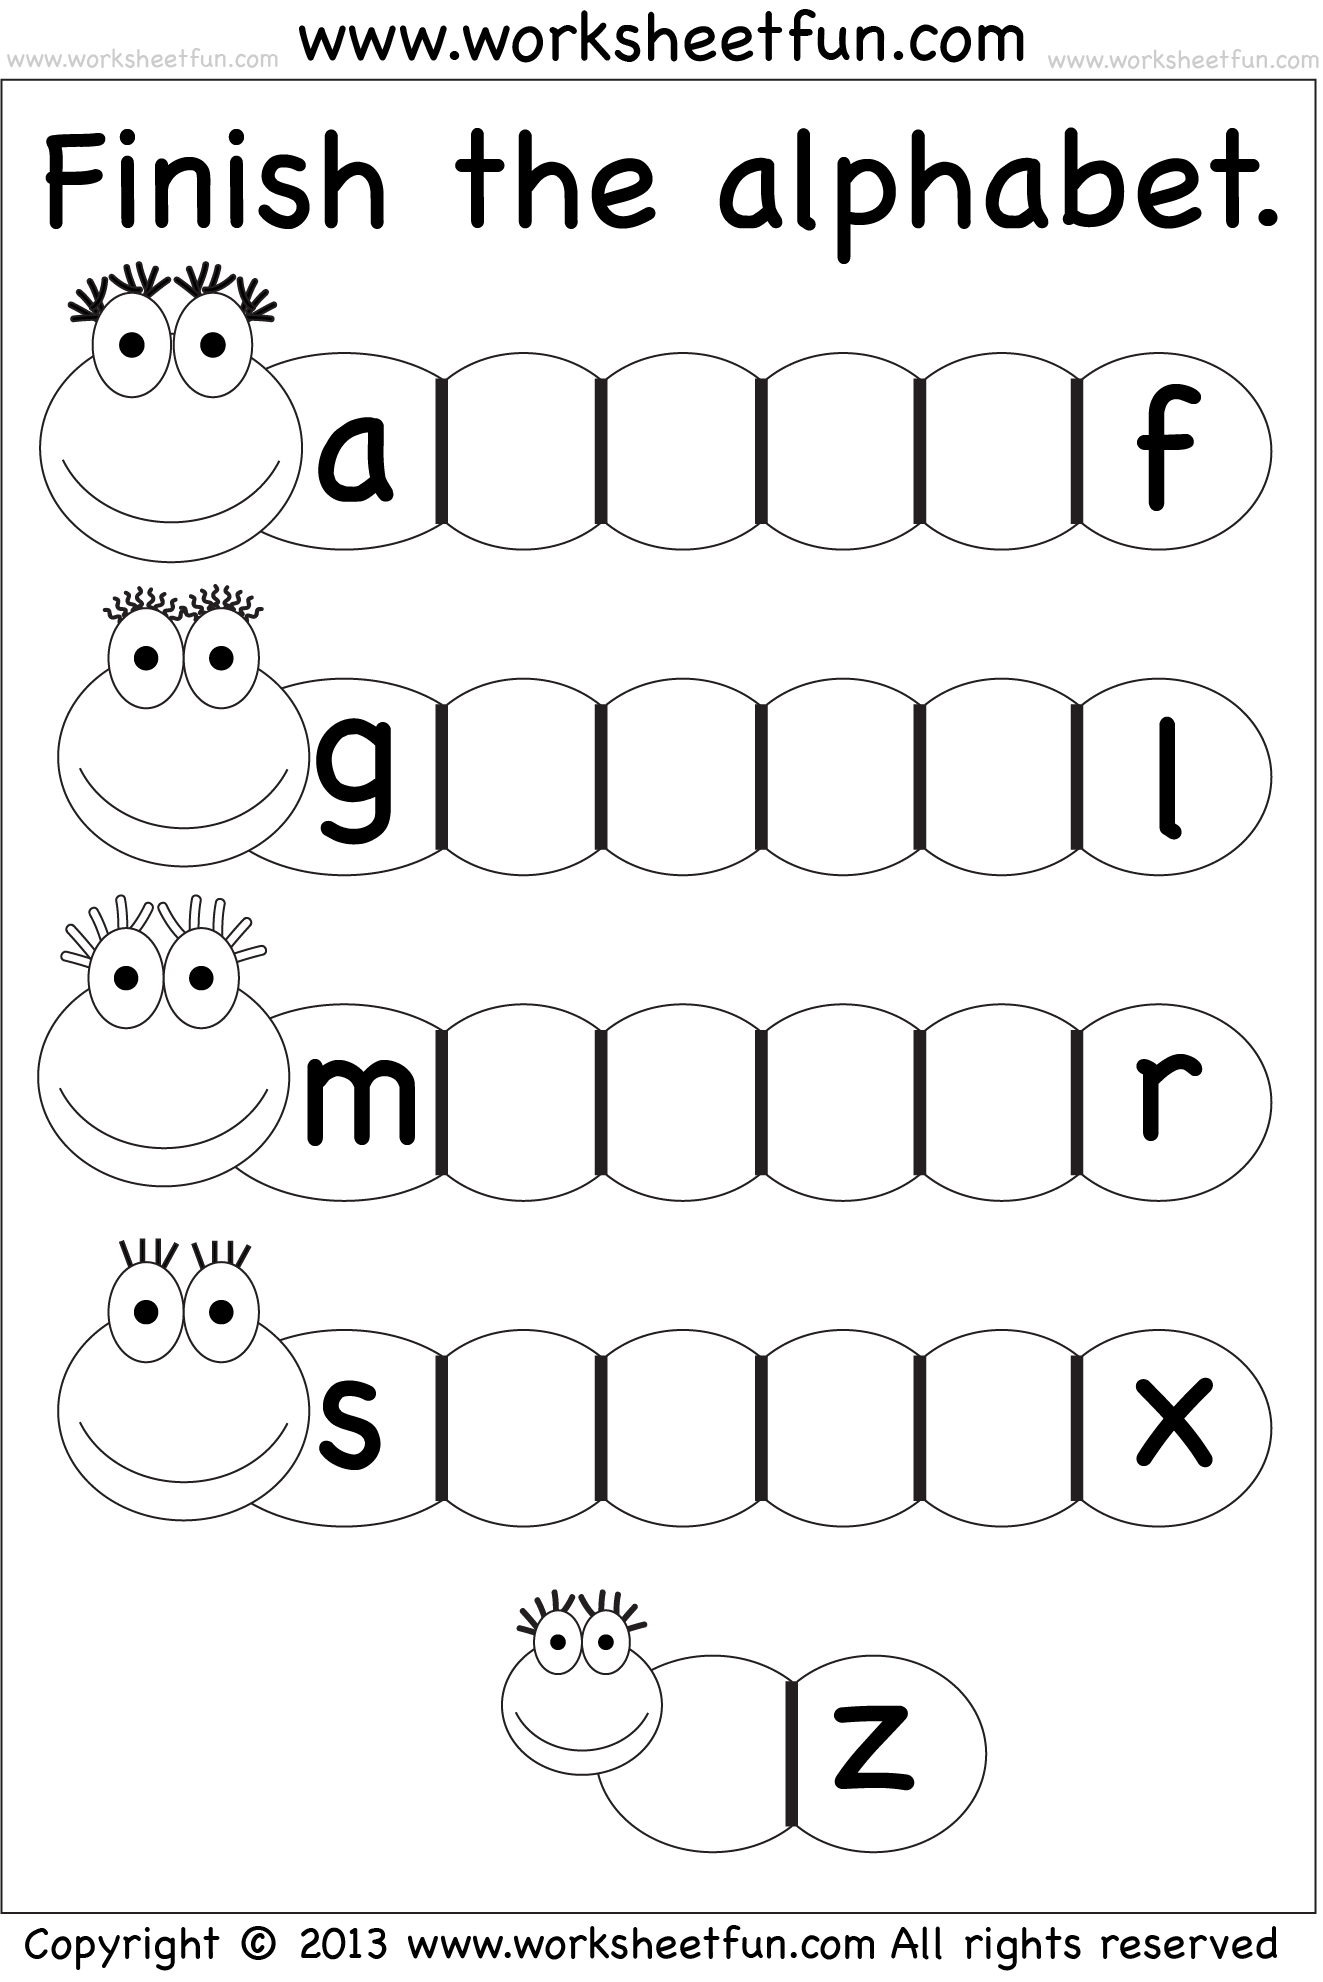 Printable English Alphabet Worksheets Activities Free For throughout Alphabet Worksheets For Elementary